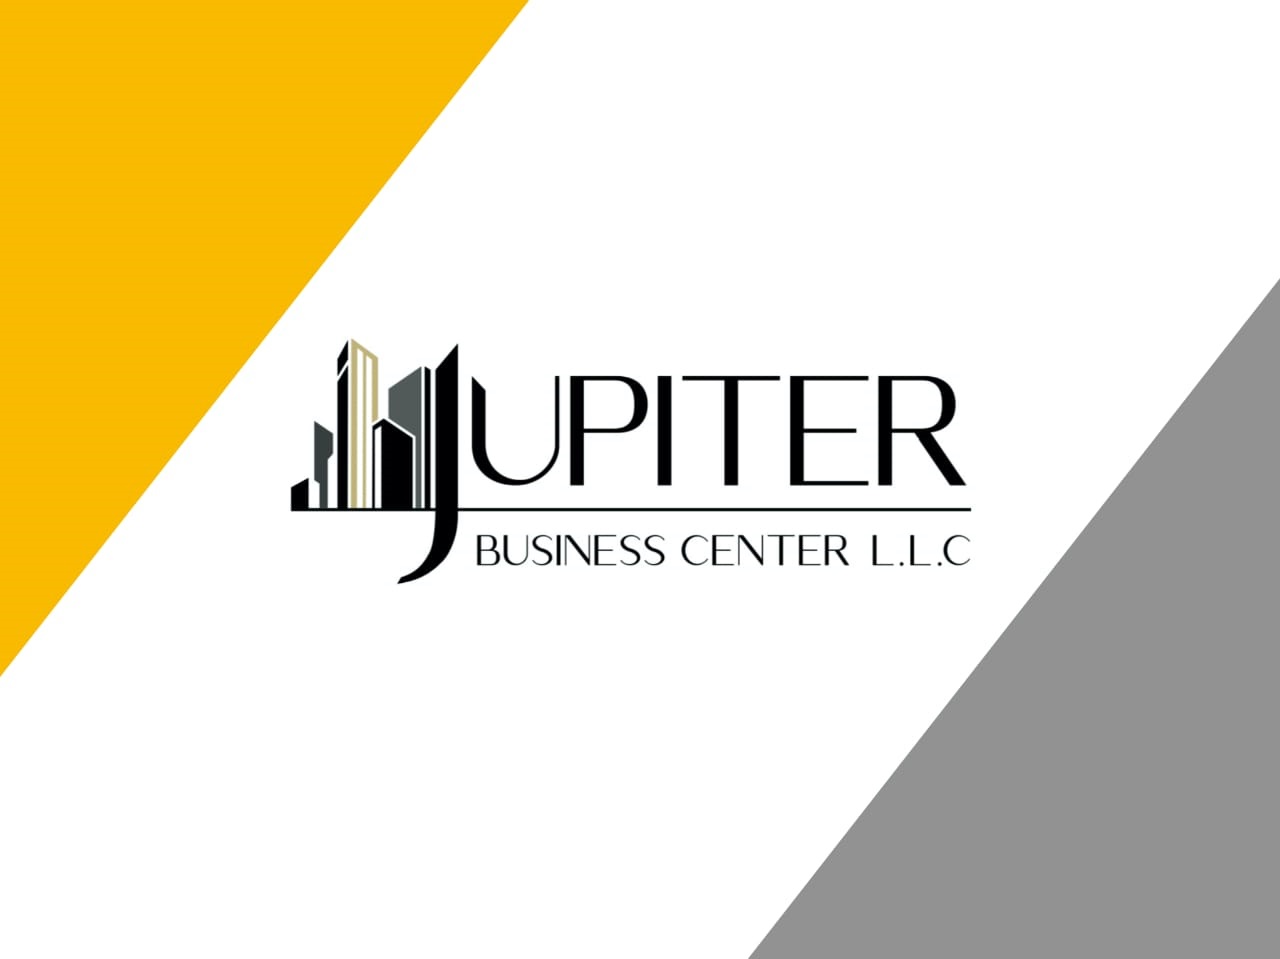 Jupiter Business Center